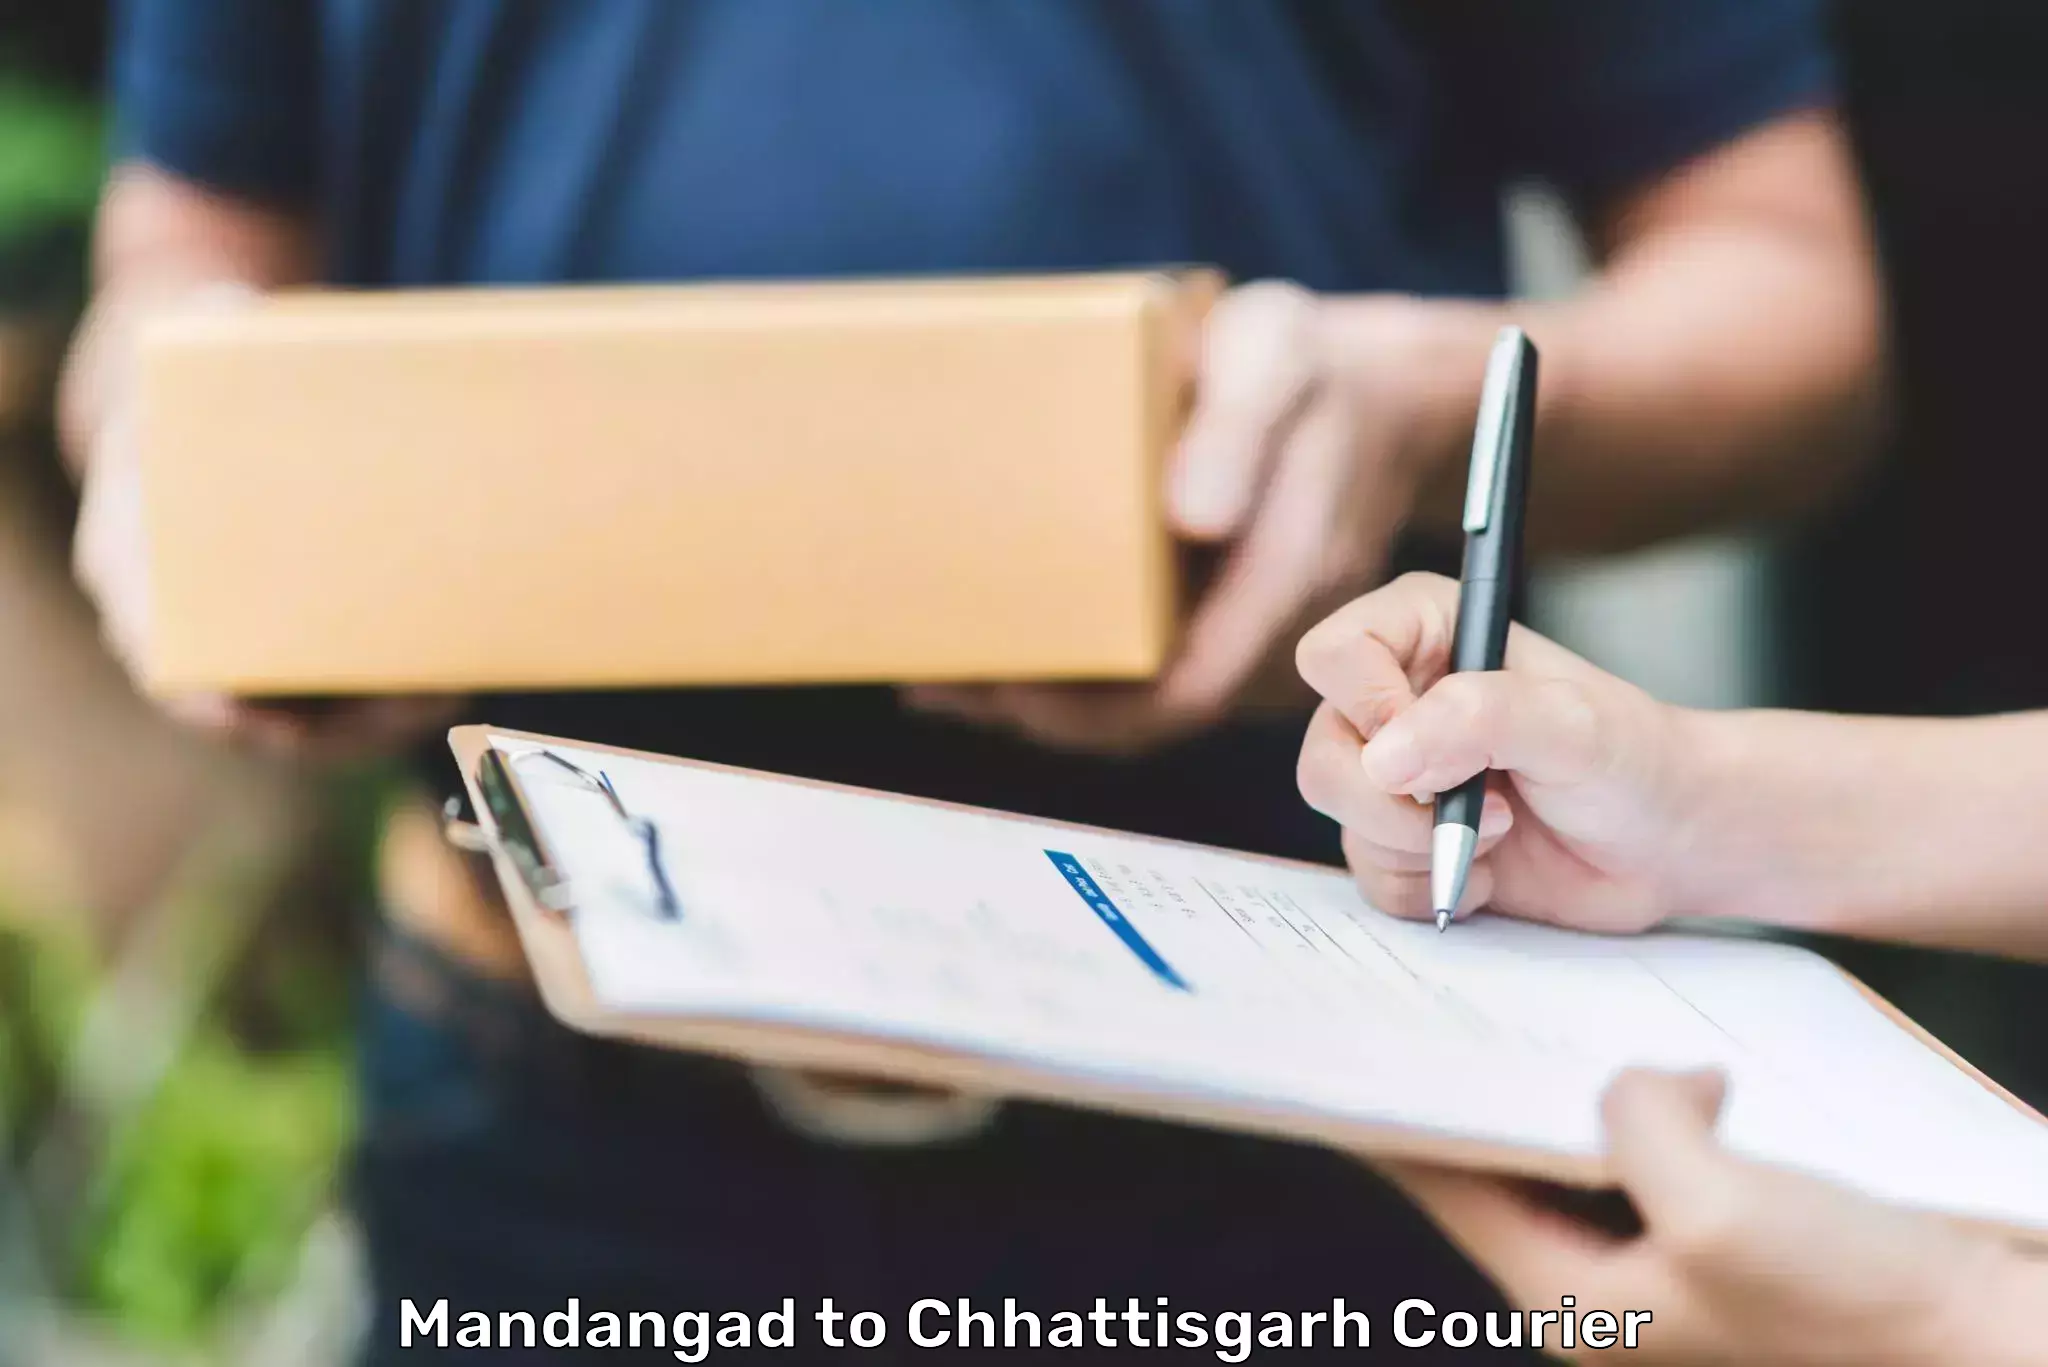 Flexible delivery scheduling Mandangad to Raigarh Chhattisgarh